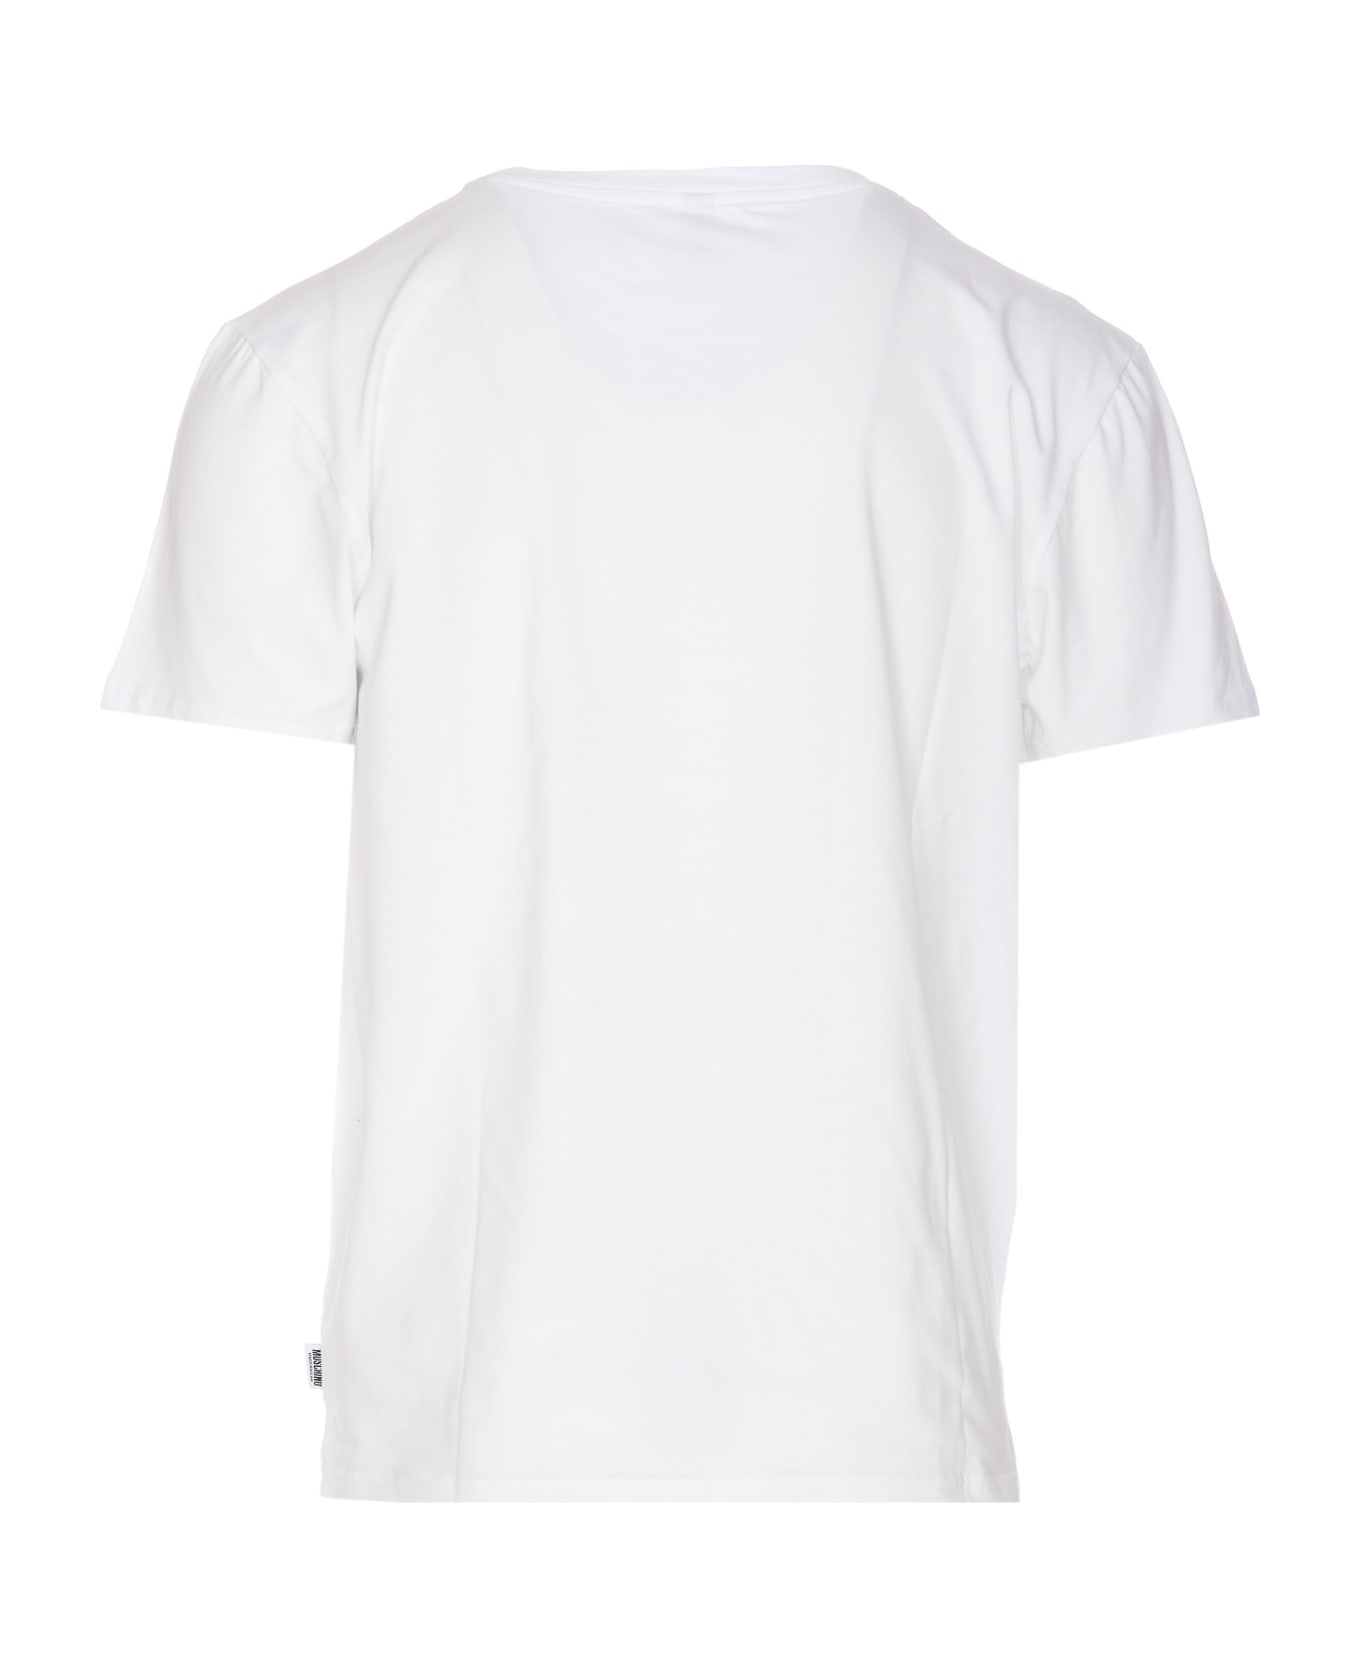 Moschino T-shirt Logo Underbear - Bianco